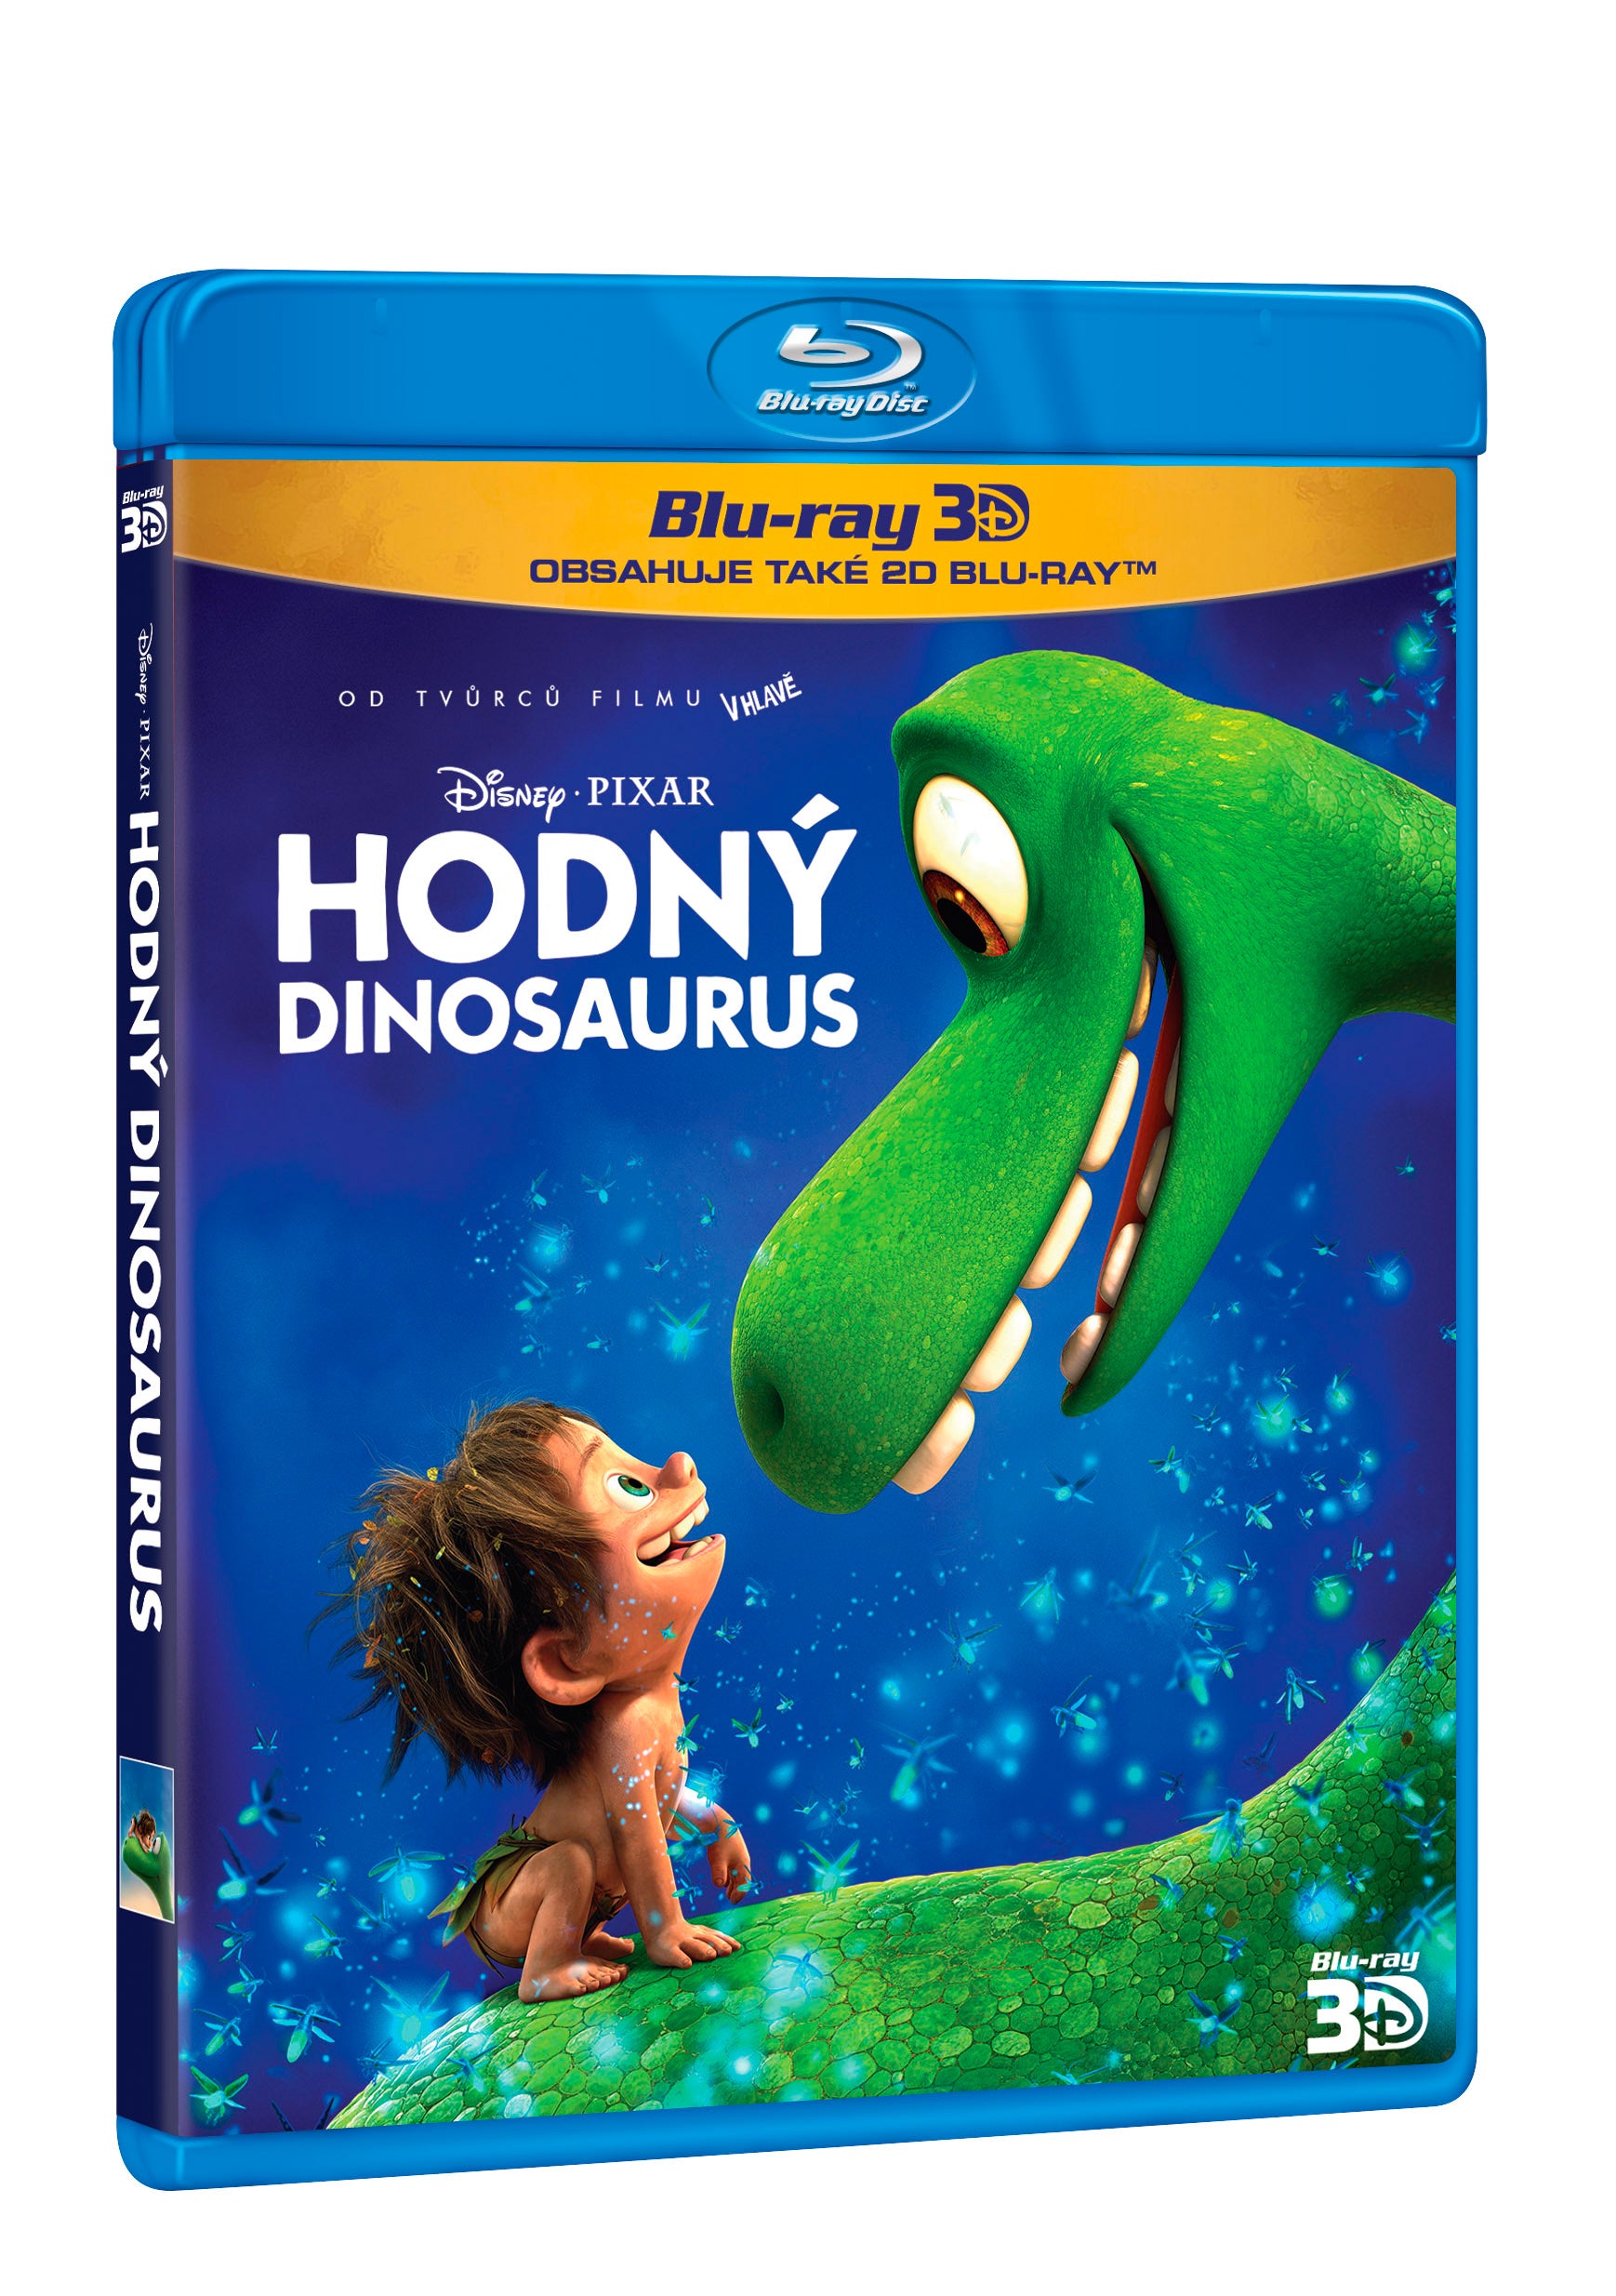 Hodny dinosaurus 2BD (3D+2D) / The Good Dinosaur - Czech version